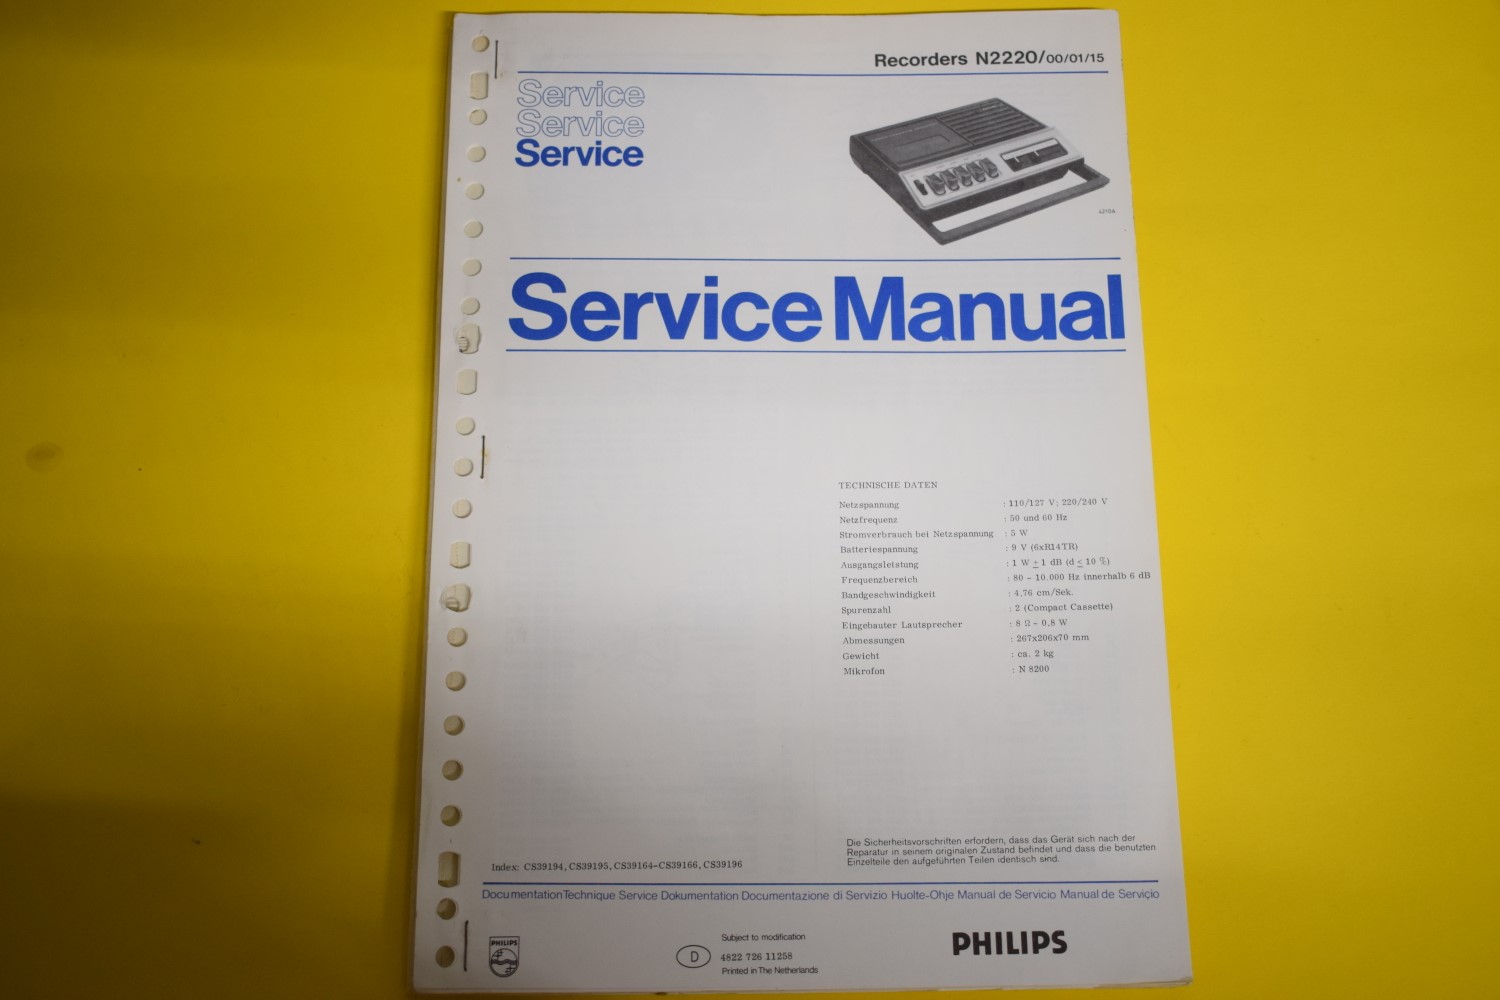 Philips N2220 cassettedeck Service Manual – German